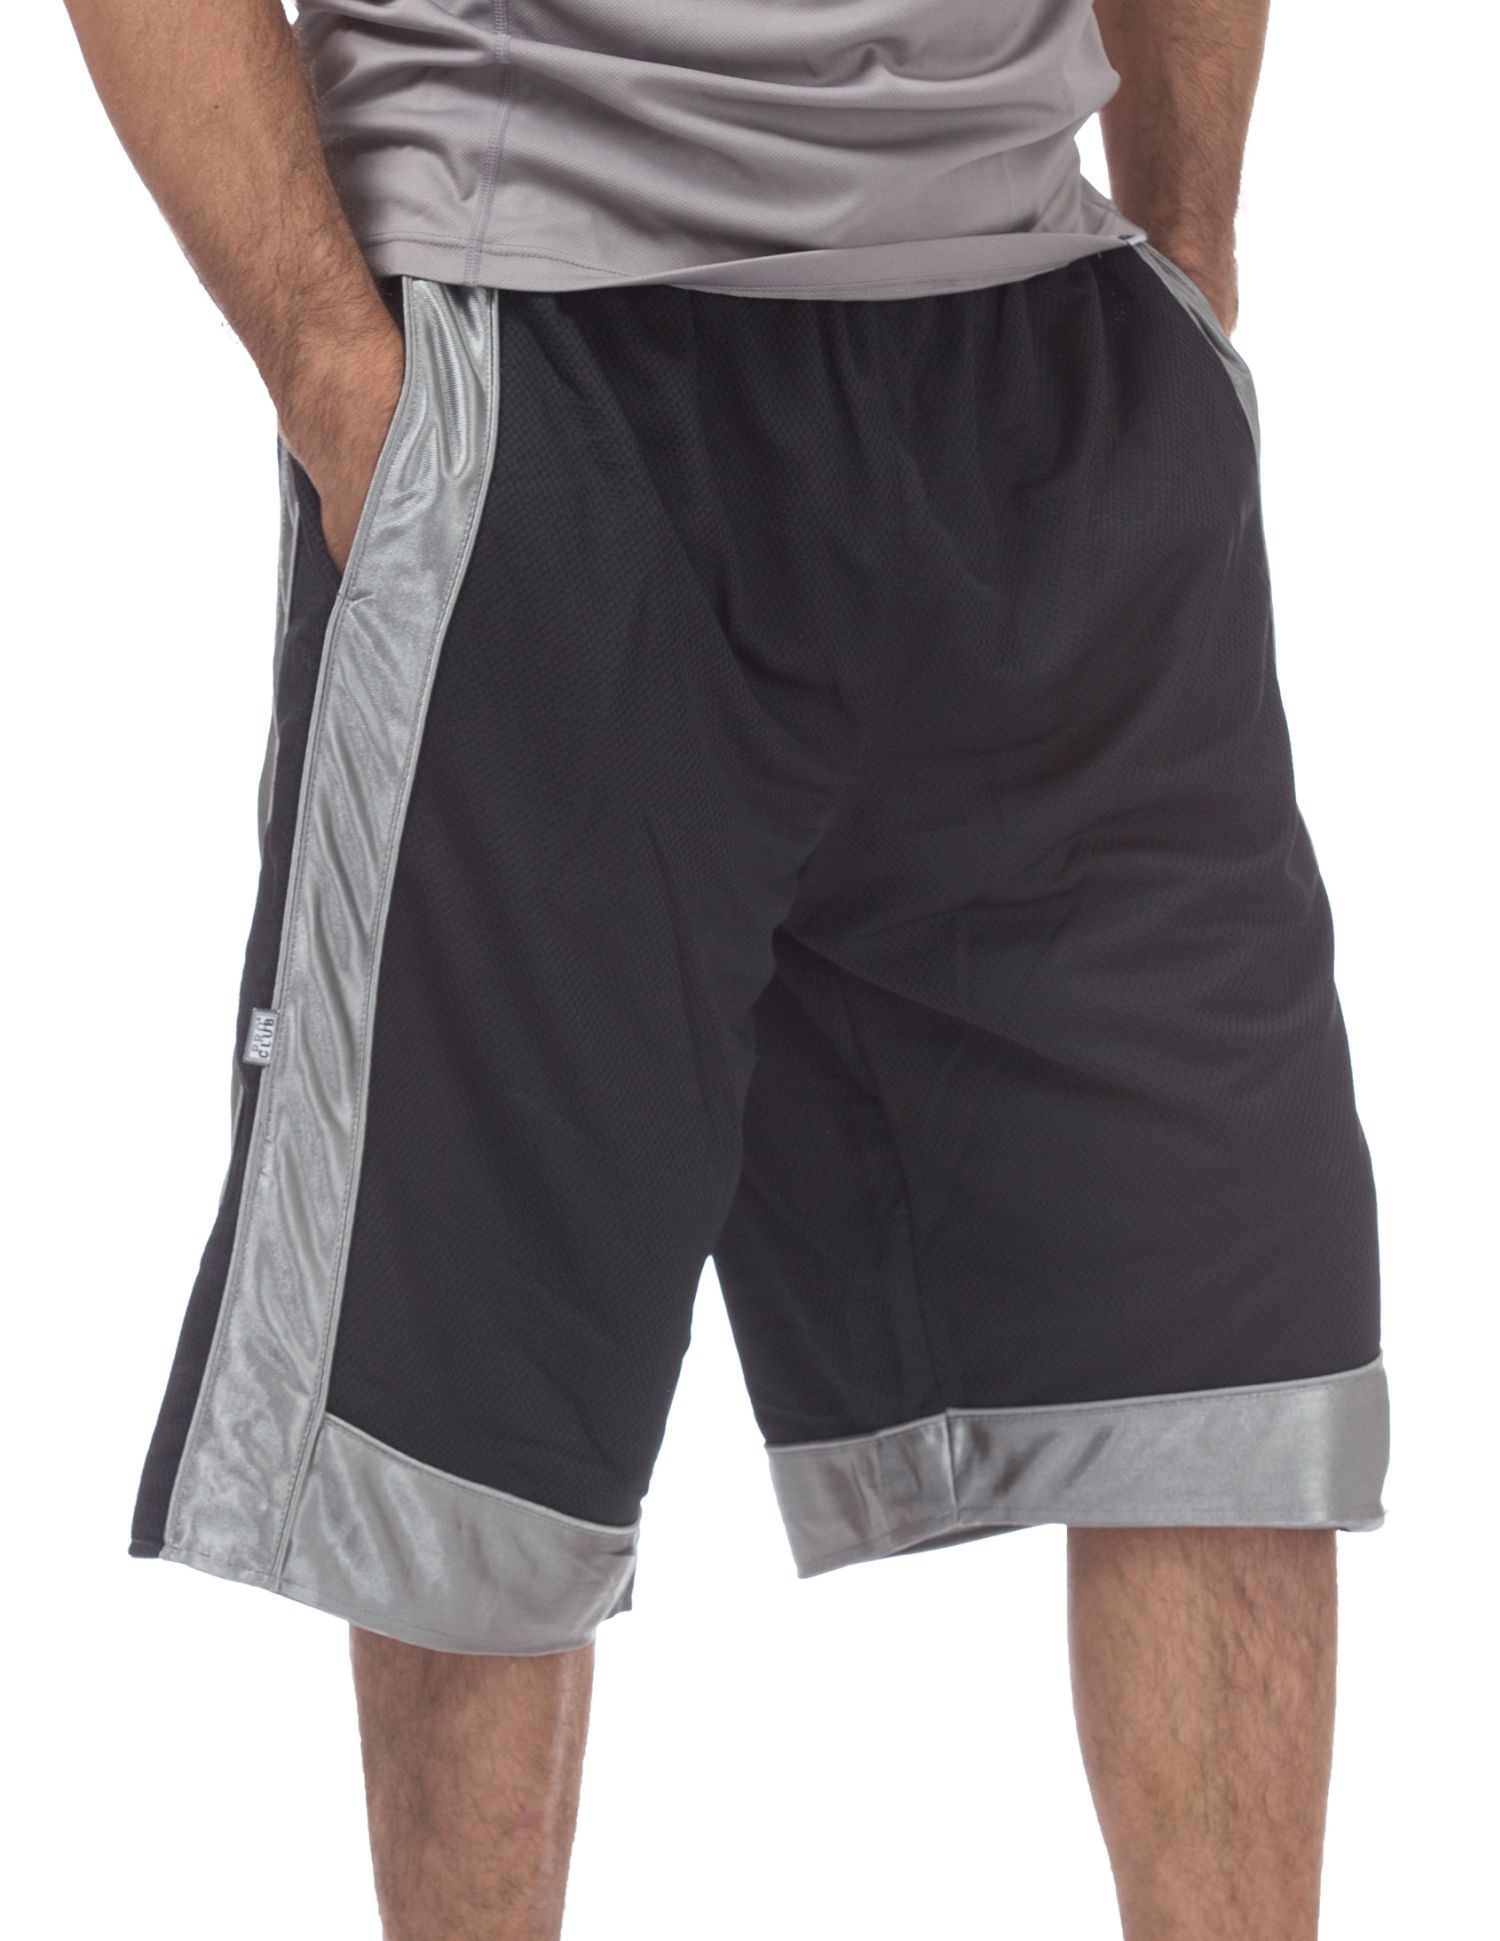 Pro Club Men's Heavyweight Mesh Basketball Shorts - Black/Gray - Medium